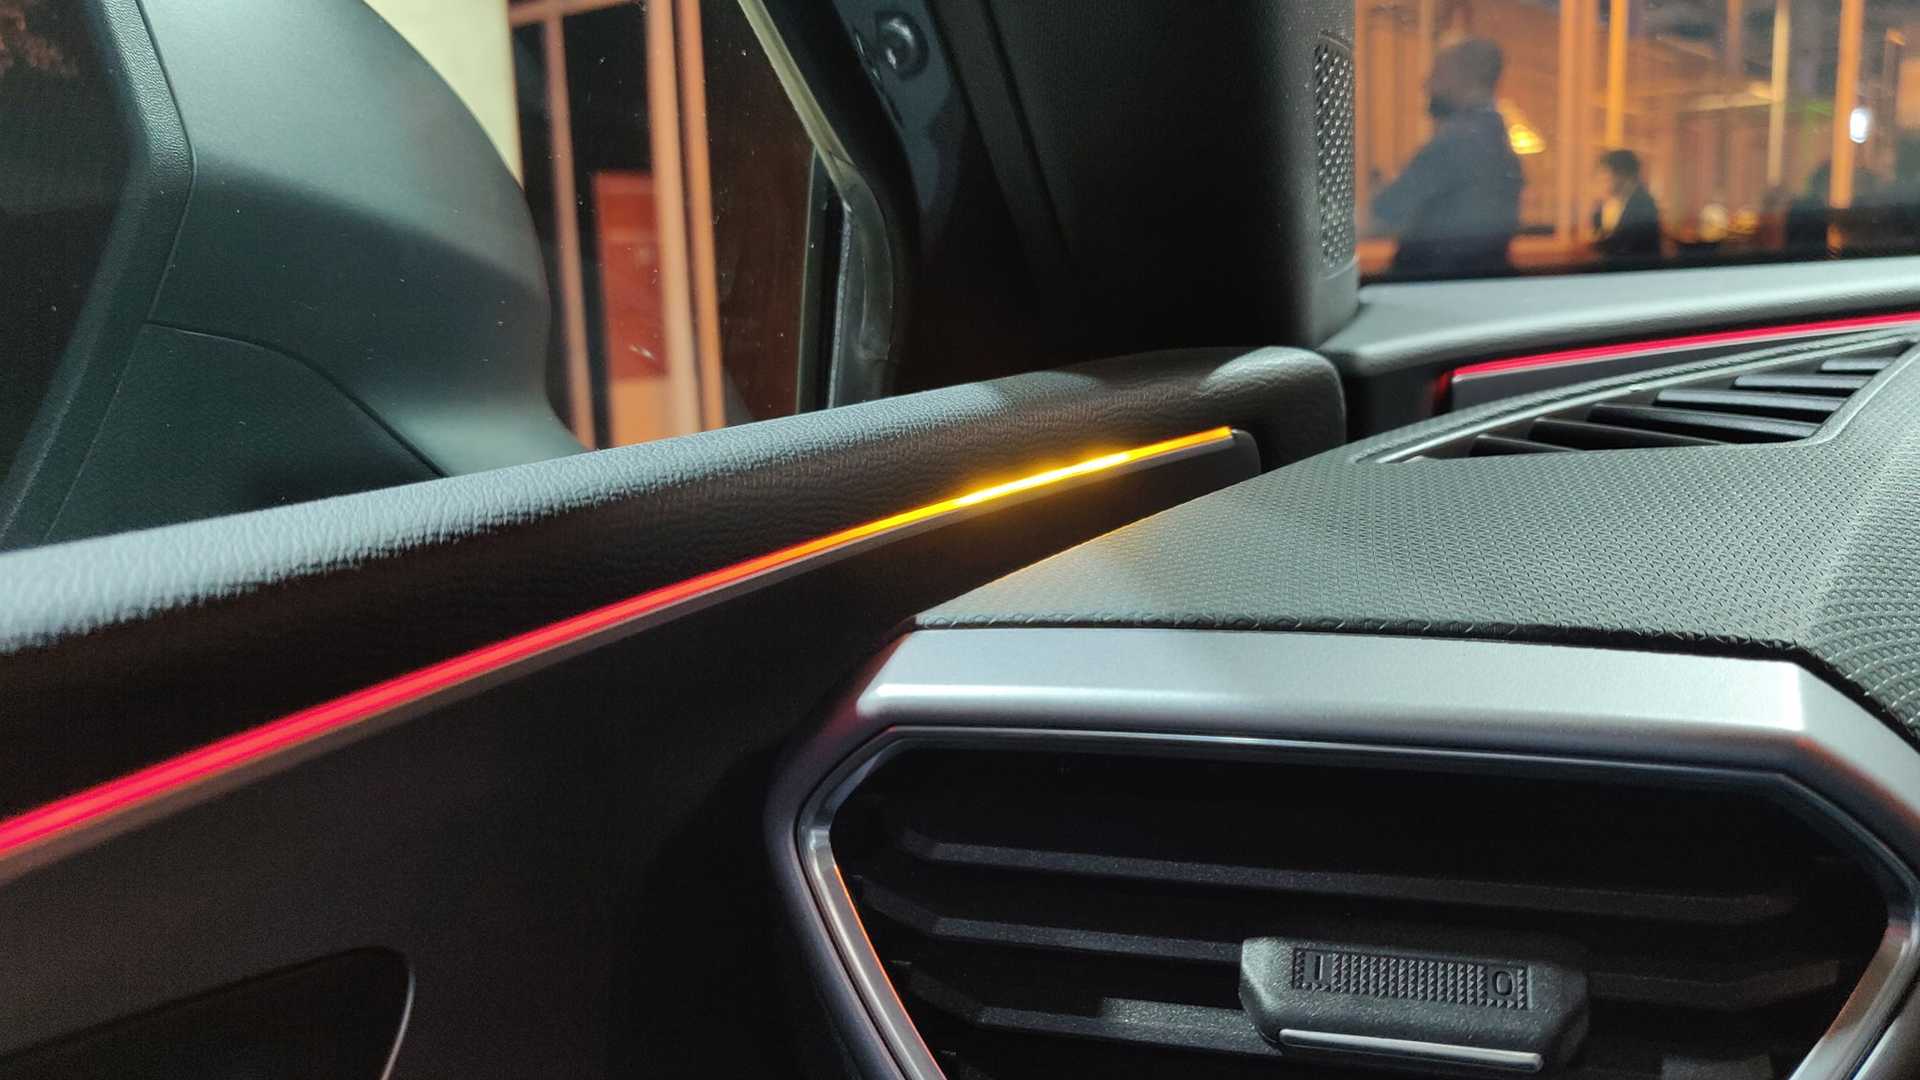 2020 SEAT Leon interior ambient lighting